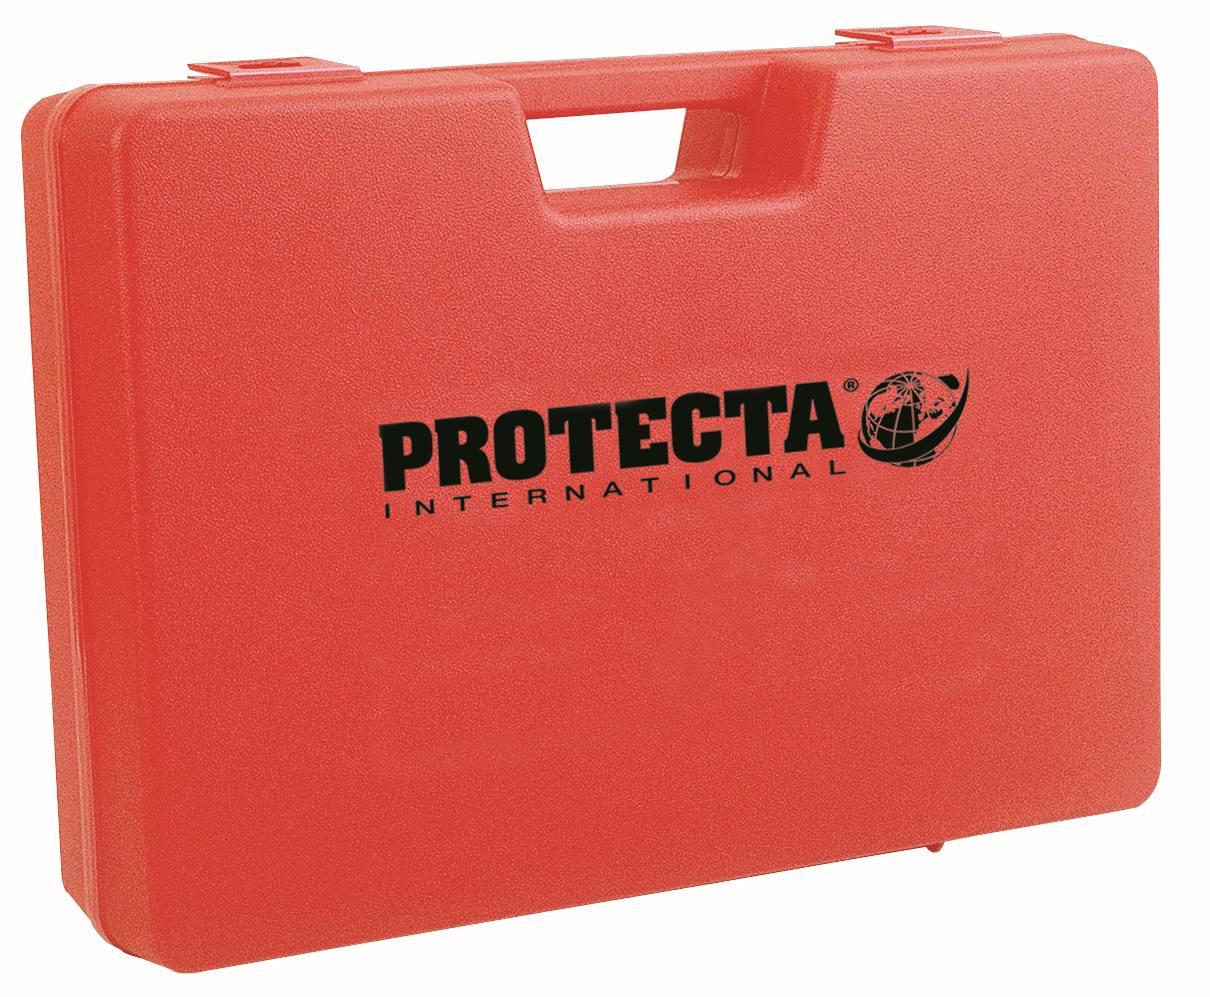 3M PROTECTA Koffer, Material PVC, rot, 50 x 37 x 12,5 cm, 50 x 37 x 12,5 cm